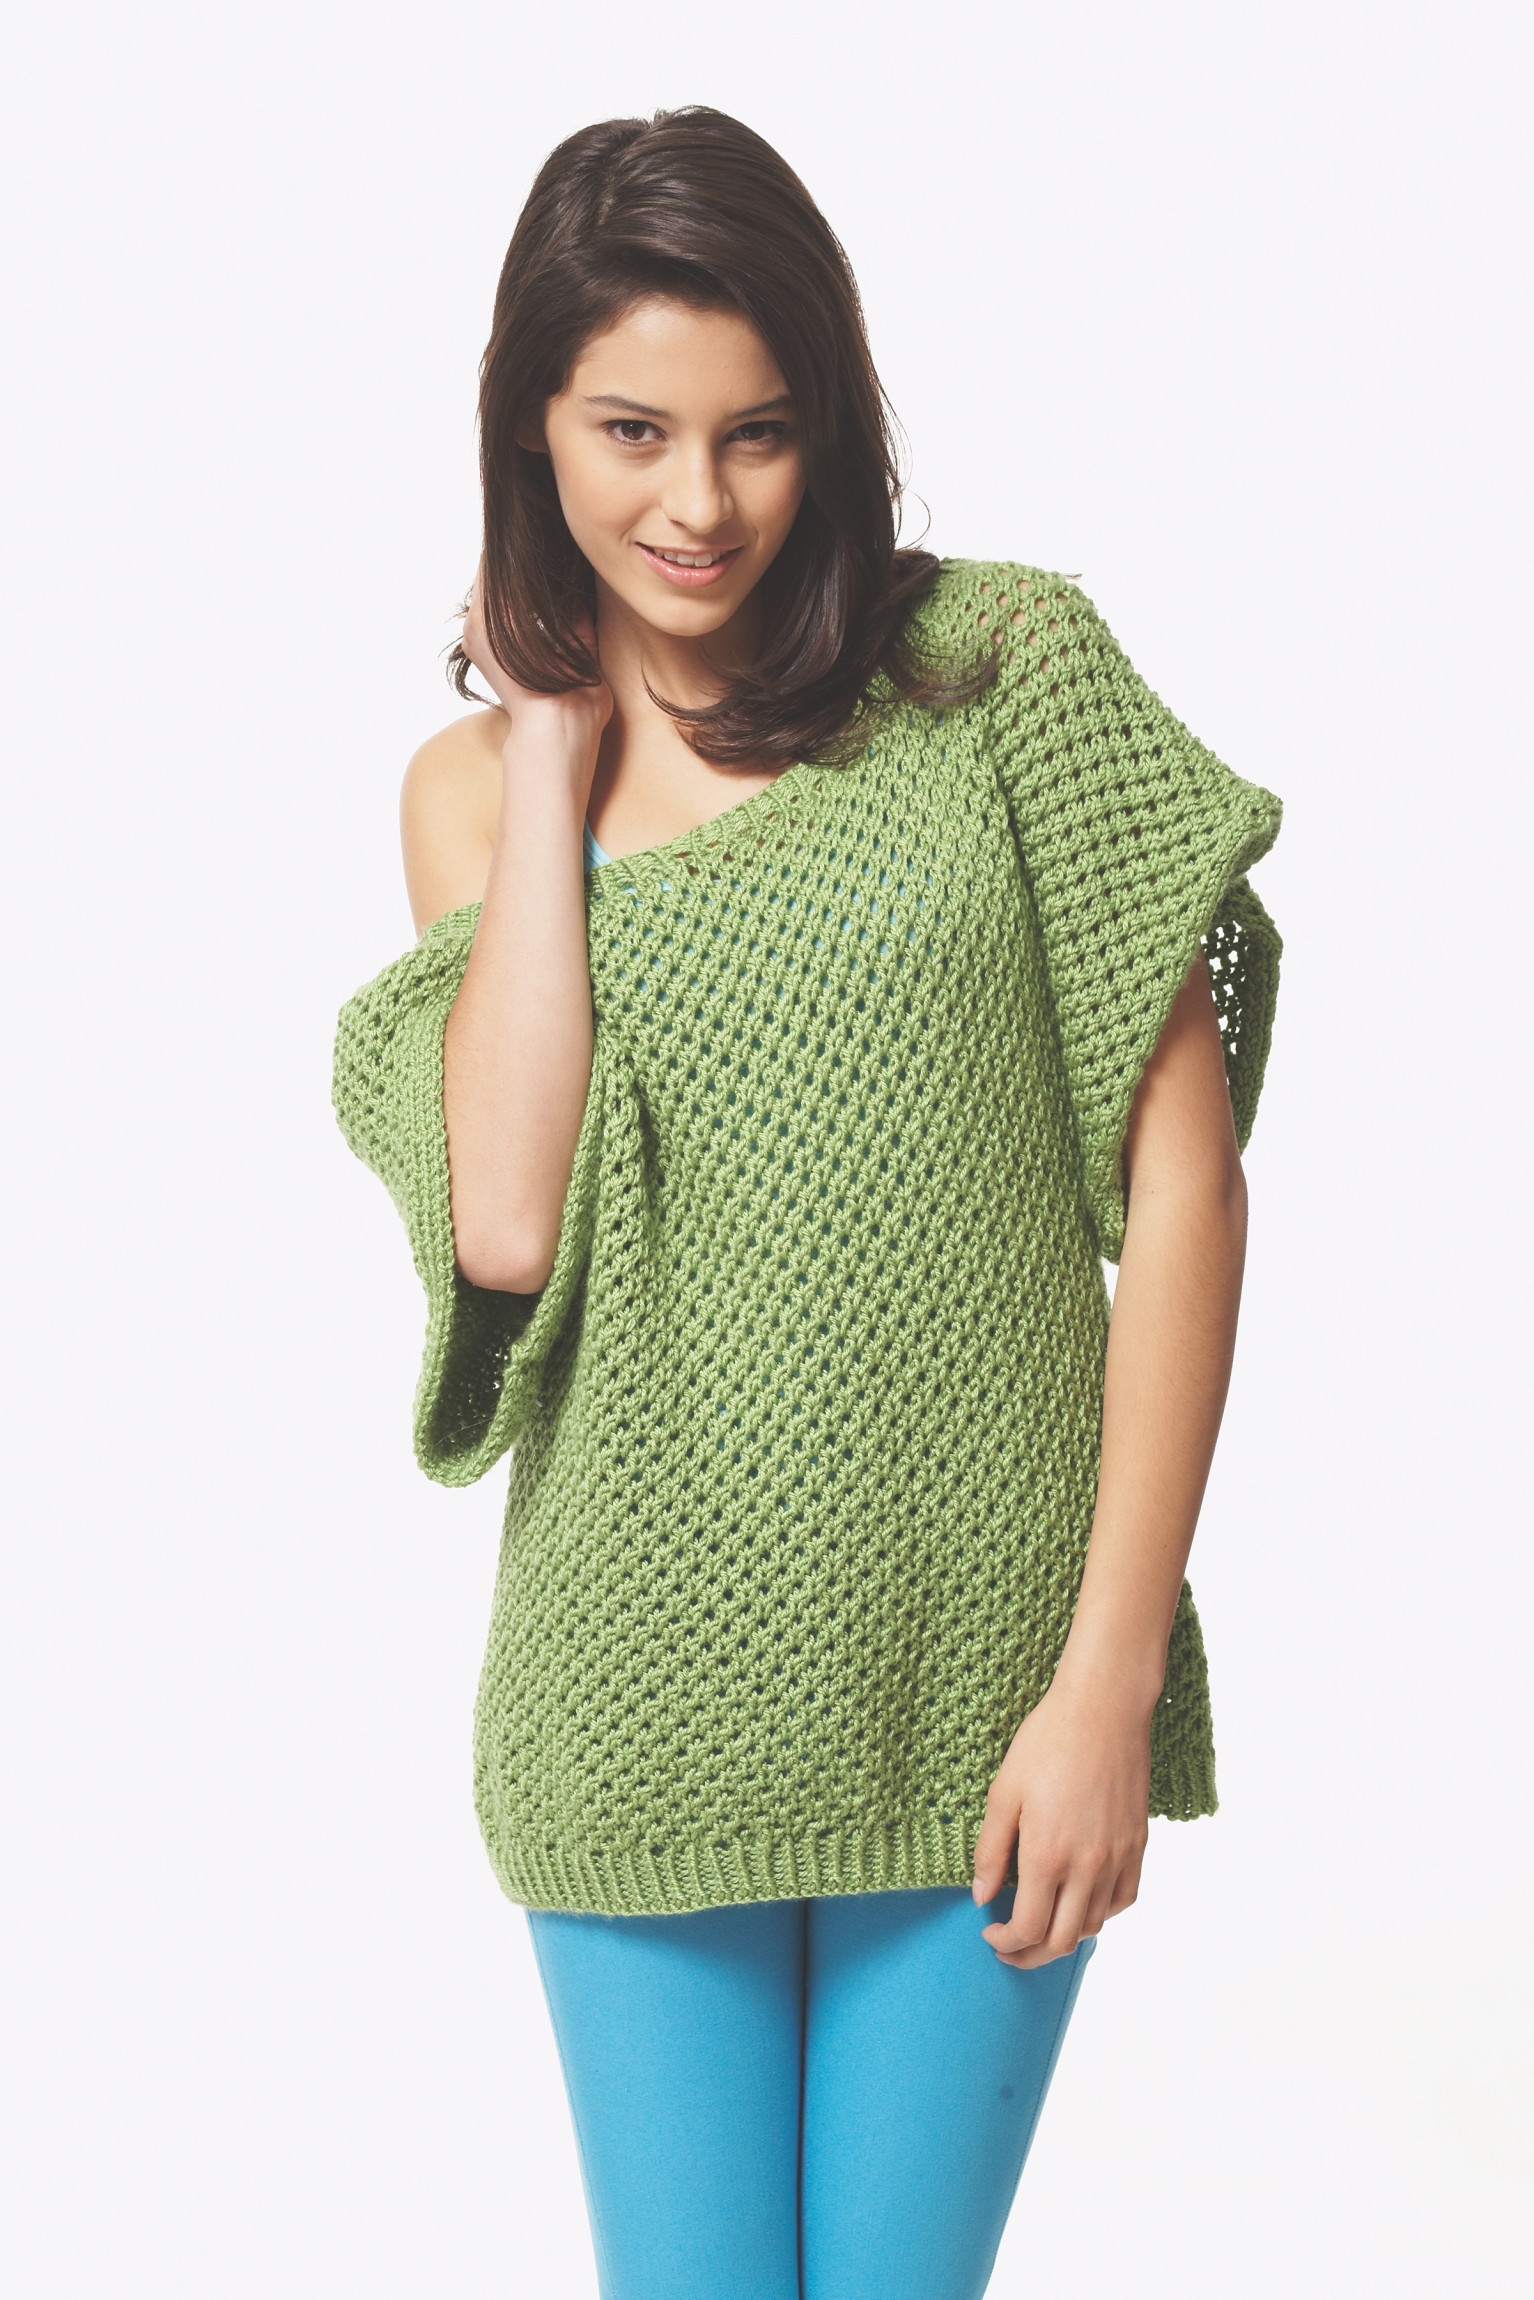 Bernat Mesh Top | Knitting Patterns | Let's Knit Magazine